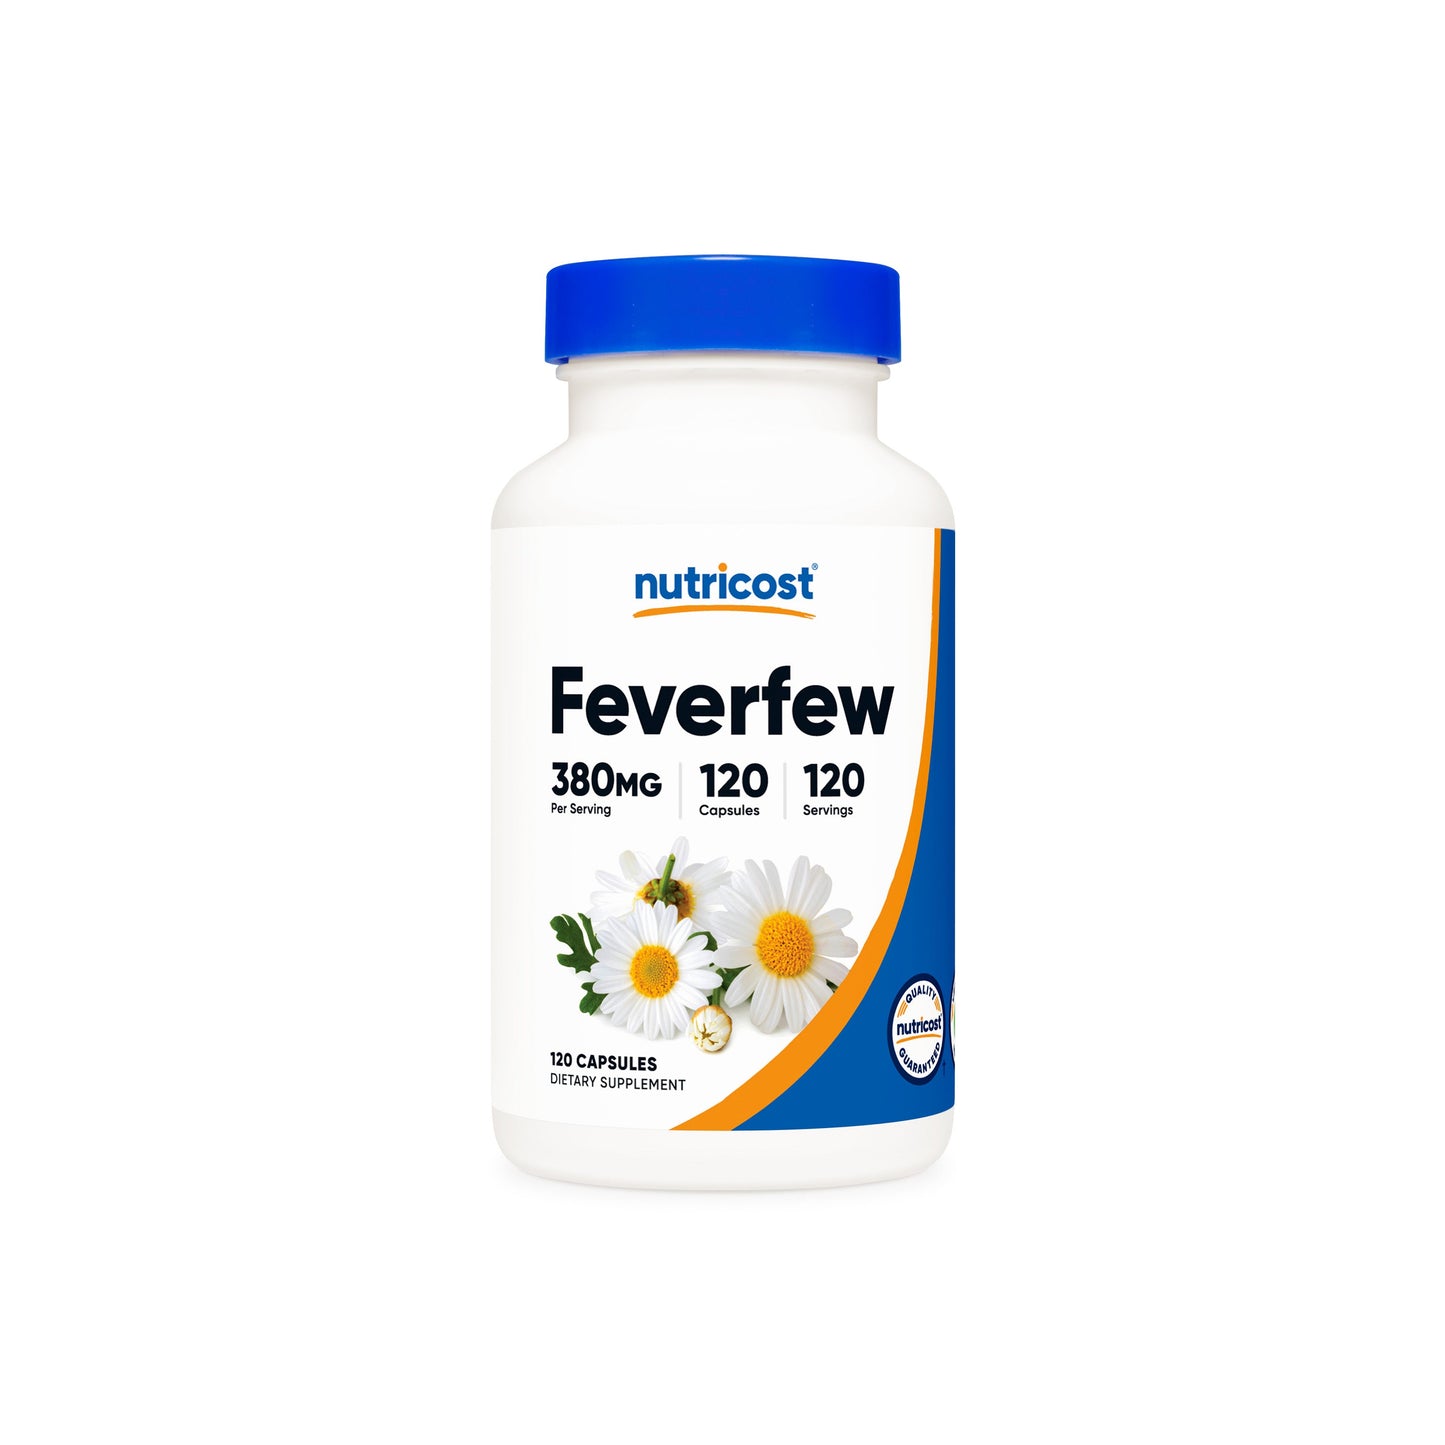 Nutricost Feverfew Capsules